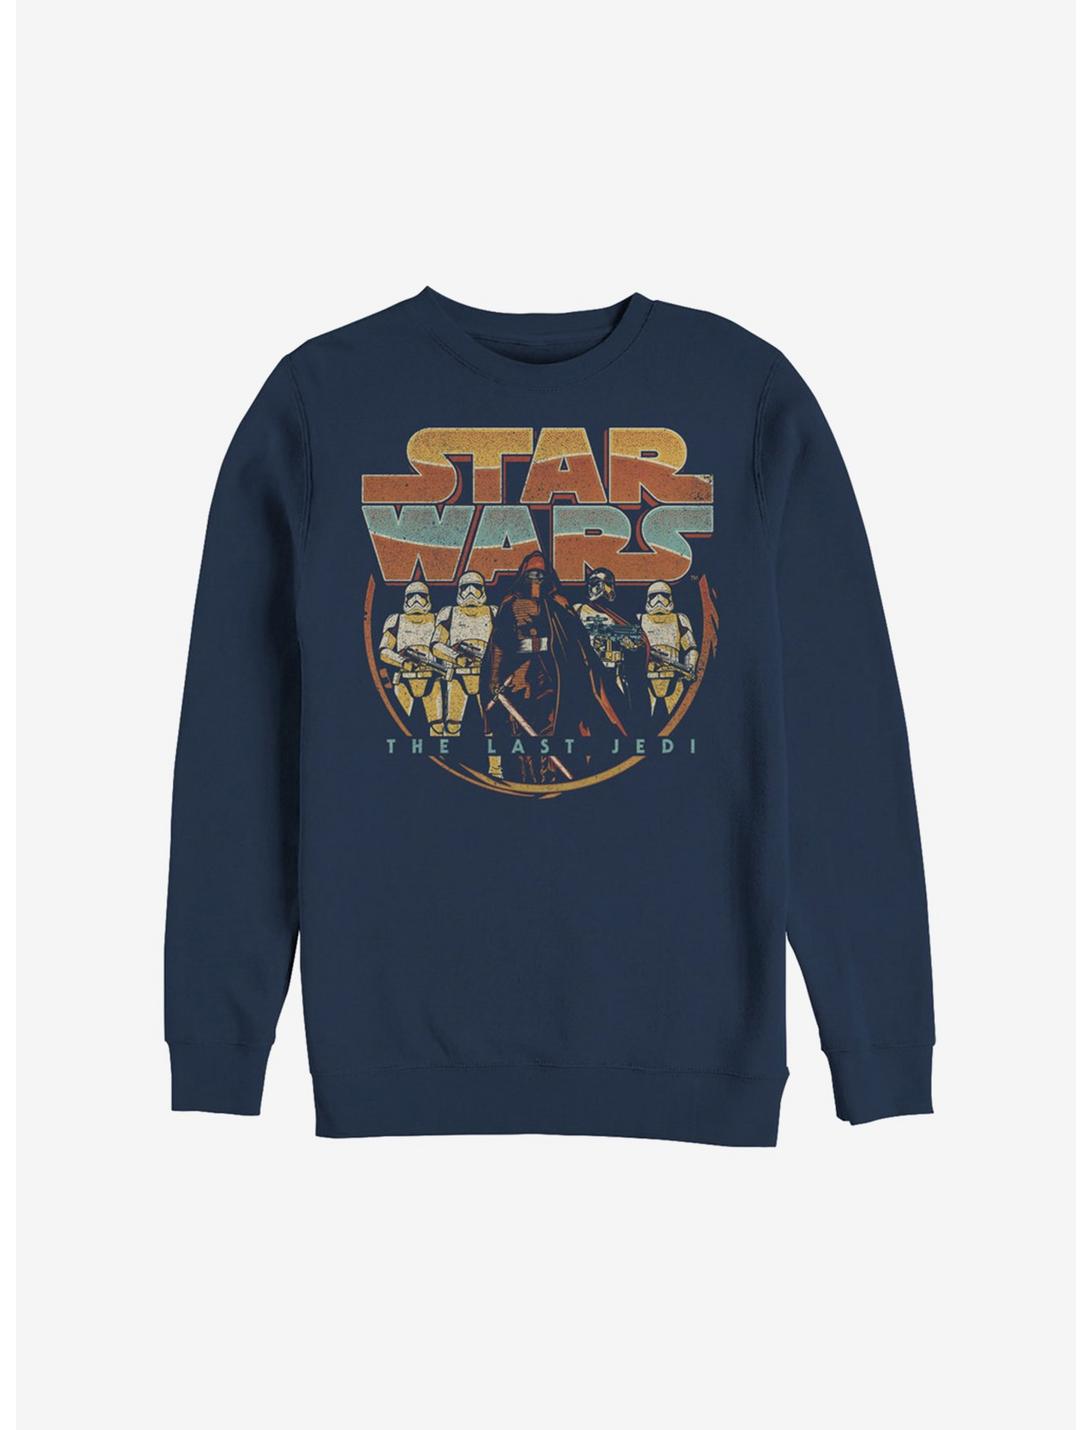 Star Wars Episode VIII The Last Jedi Retro Style Sweatshirt, NAVY, hi-res